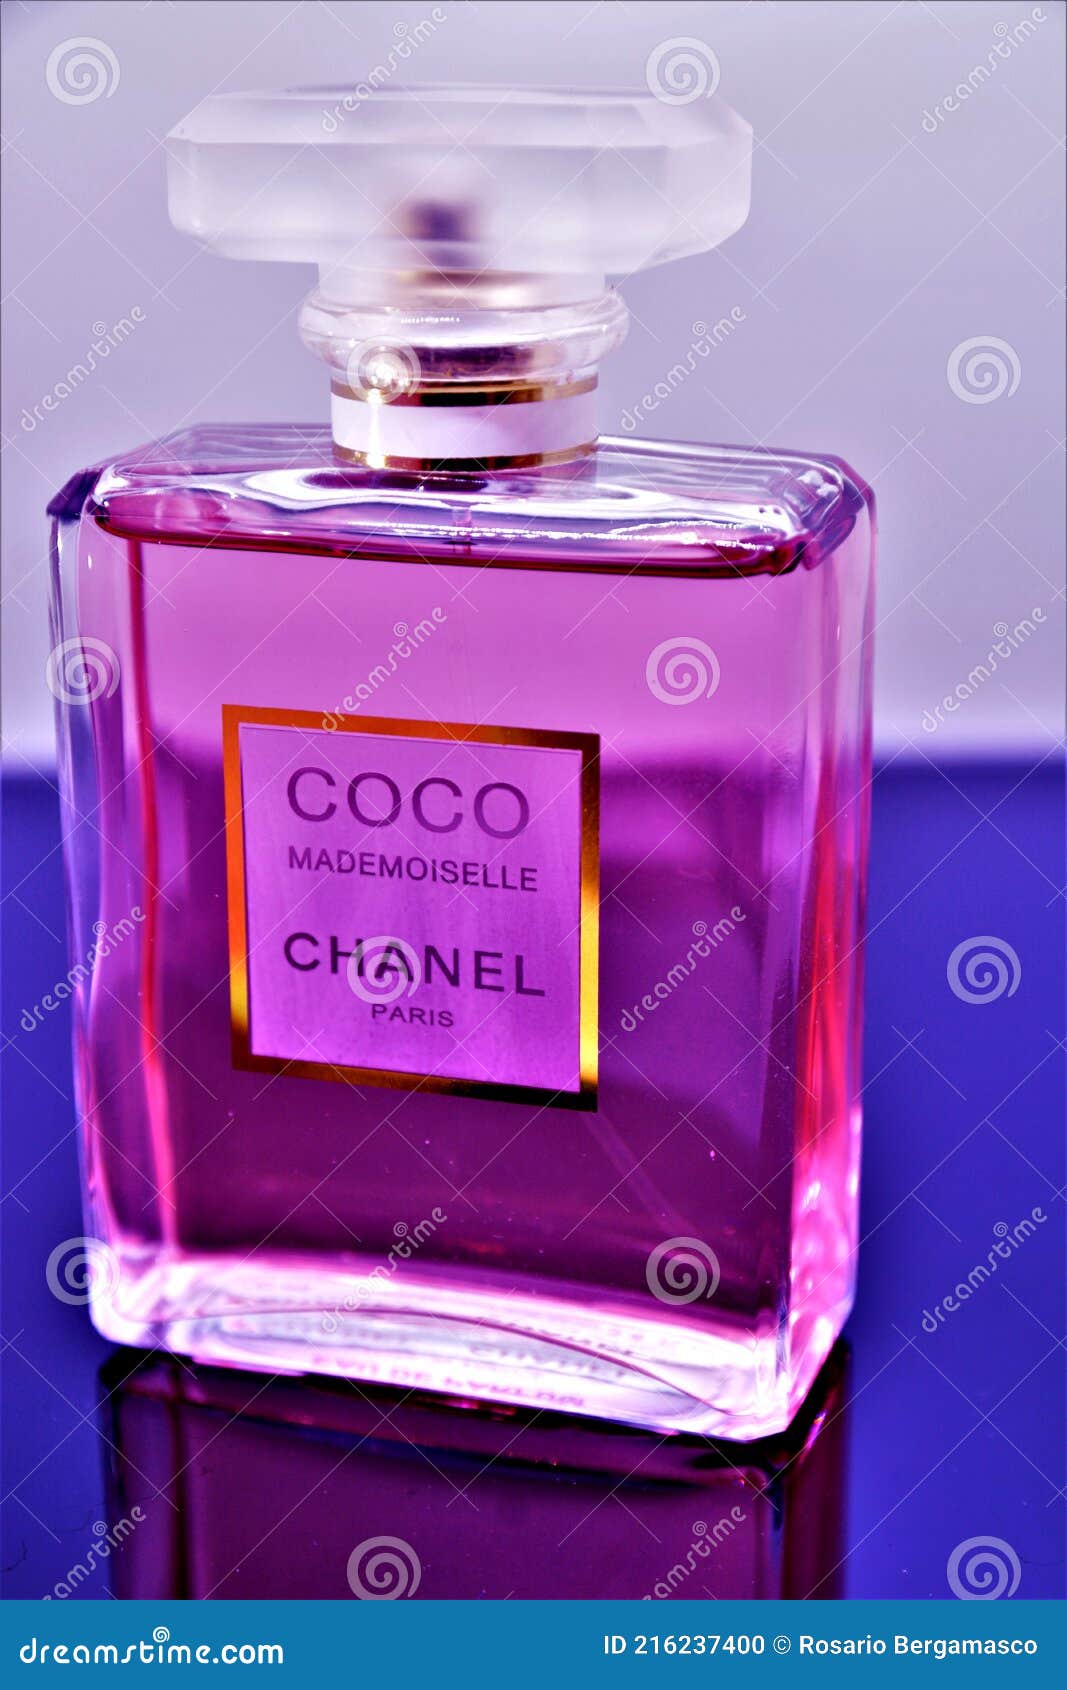 Perfume Coco Chanel Elegant for Women Fashion Aroma Editorial Image - Image  of friarielli, gourmet: 216237400